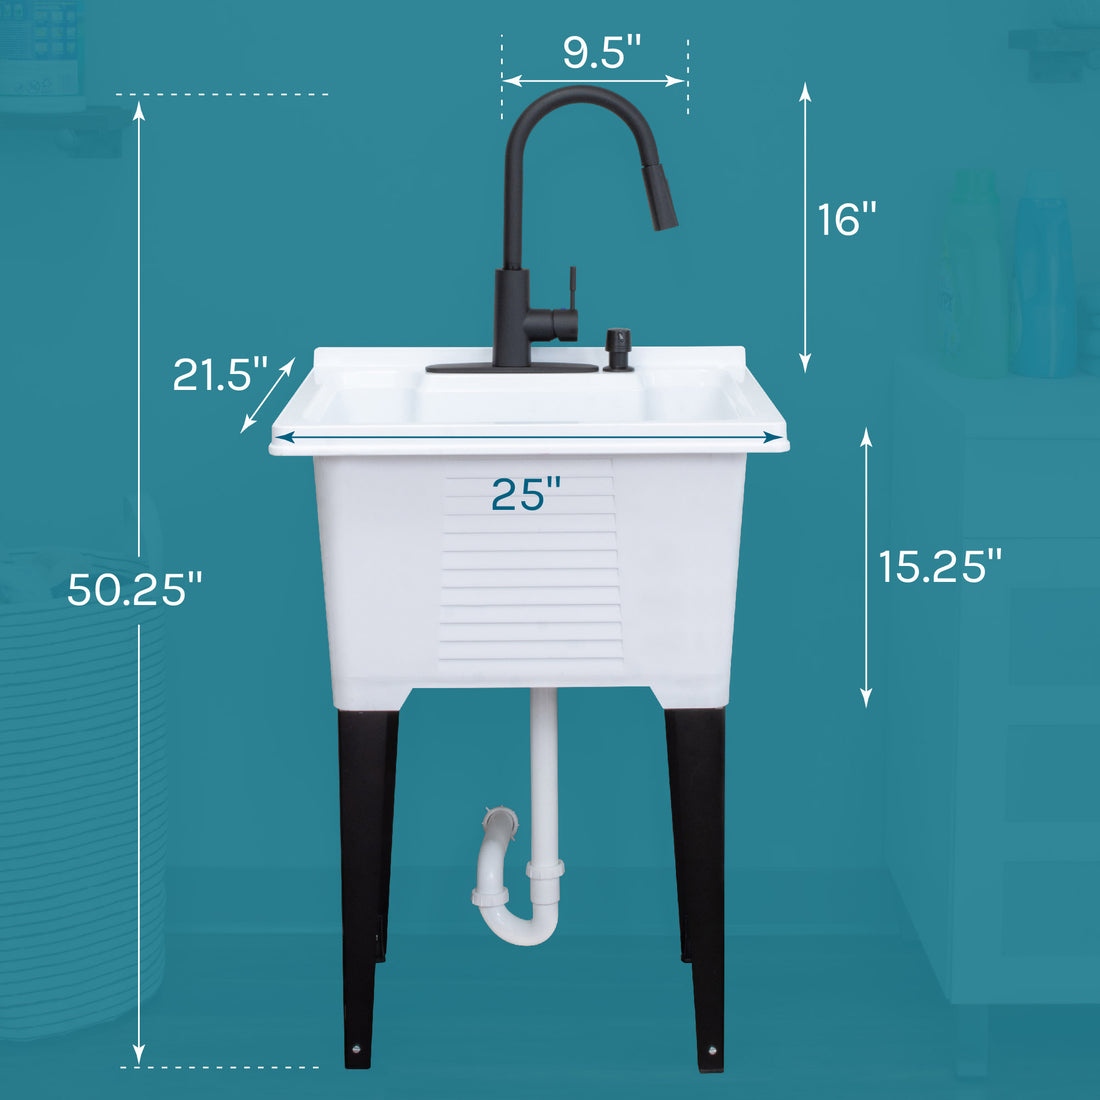 Tehila Luxe Freestanding White Utility Sink with Black Finish High-Arc Pull-Down Faucet - Utility sinks vanites Tehila